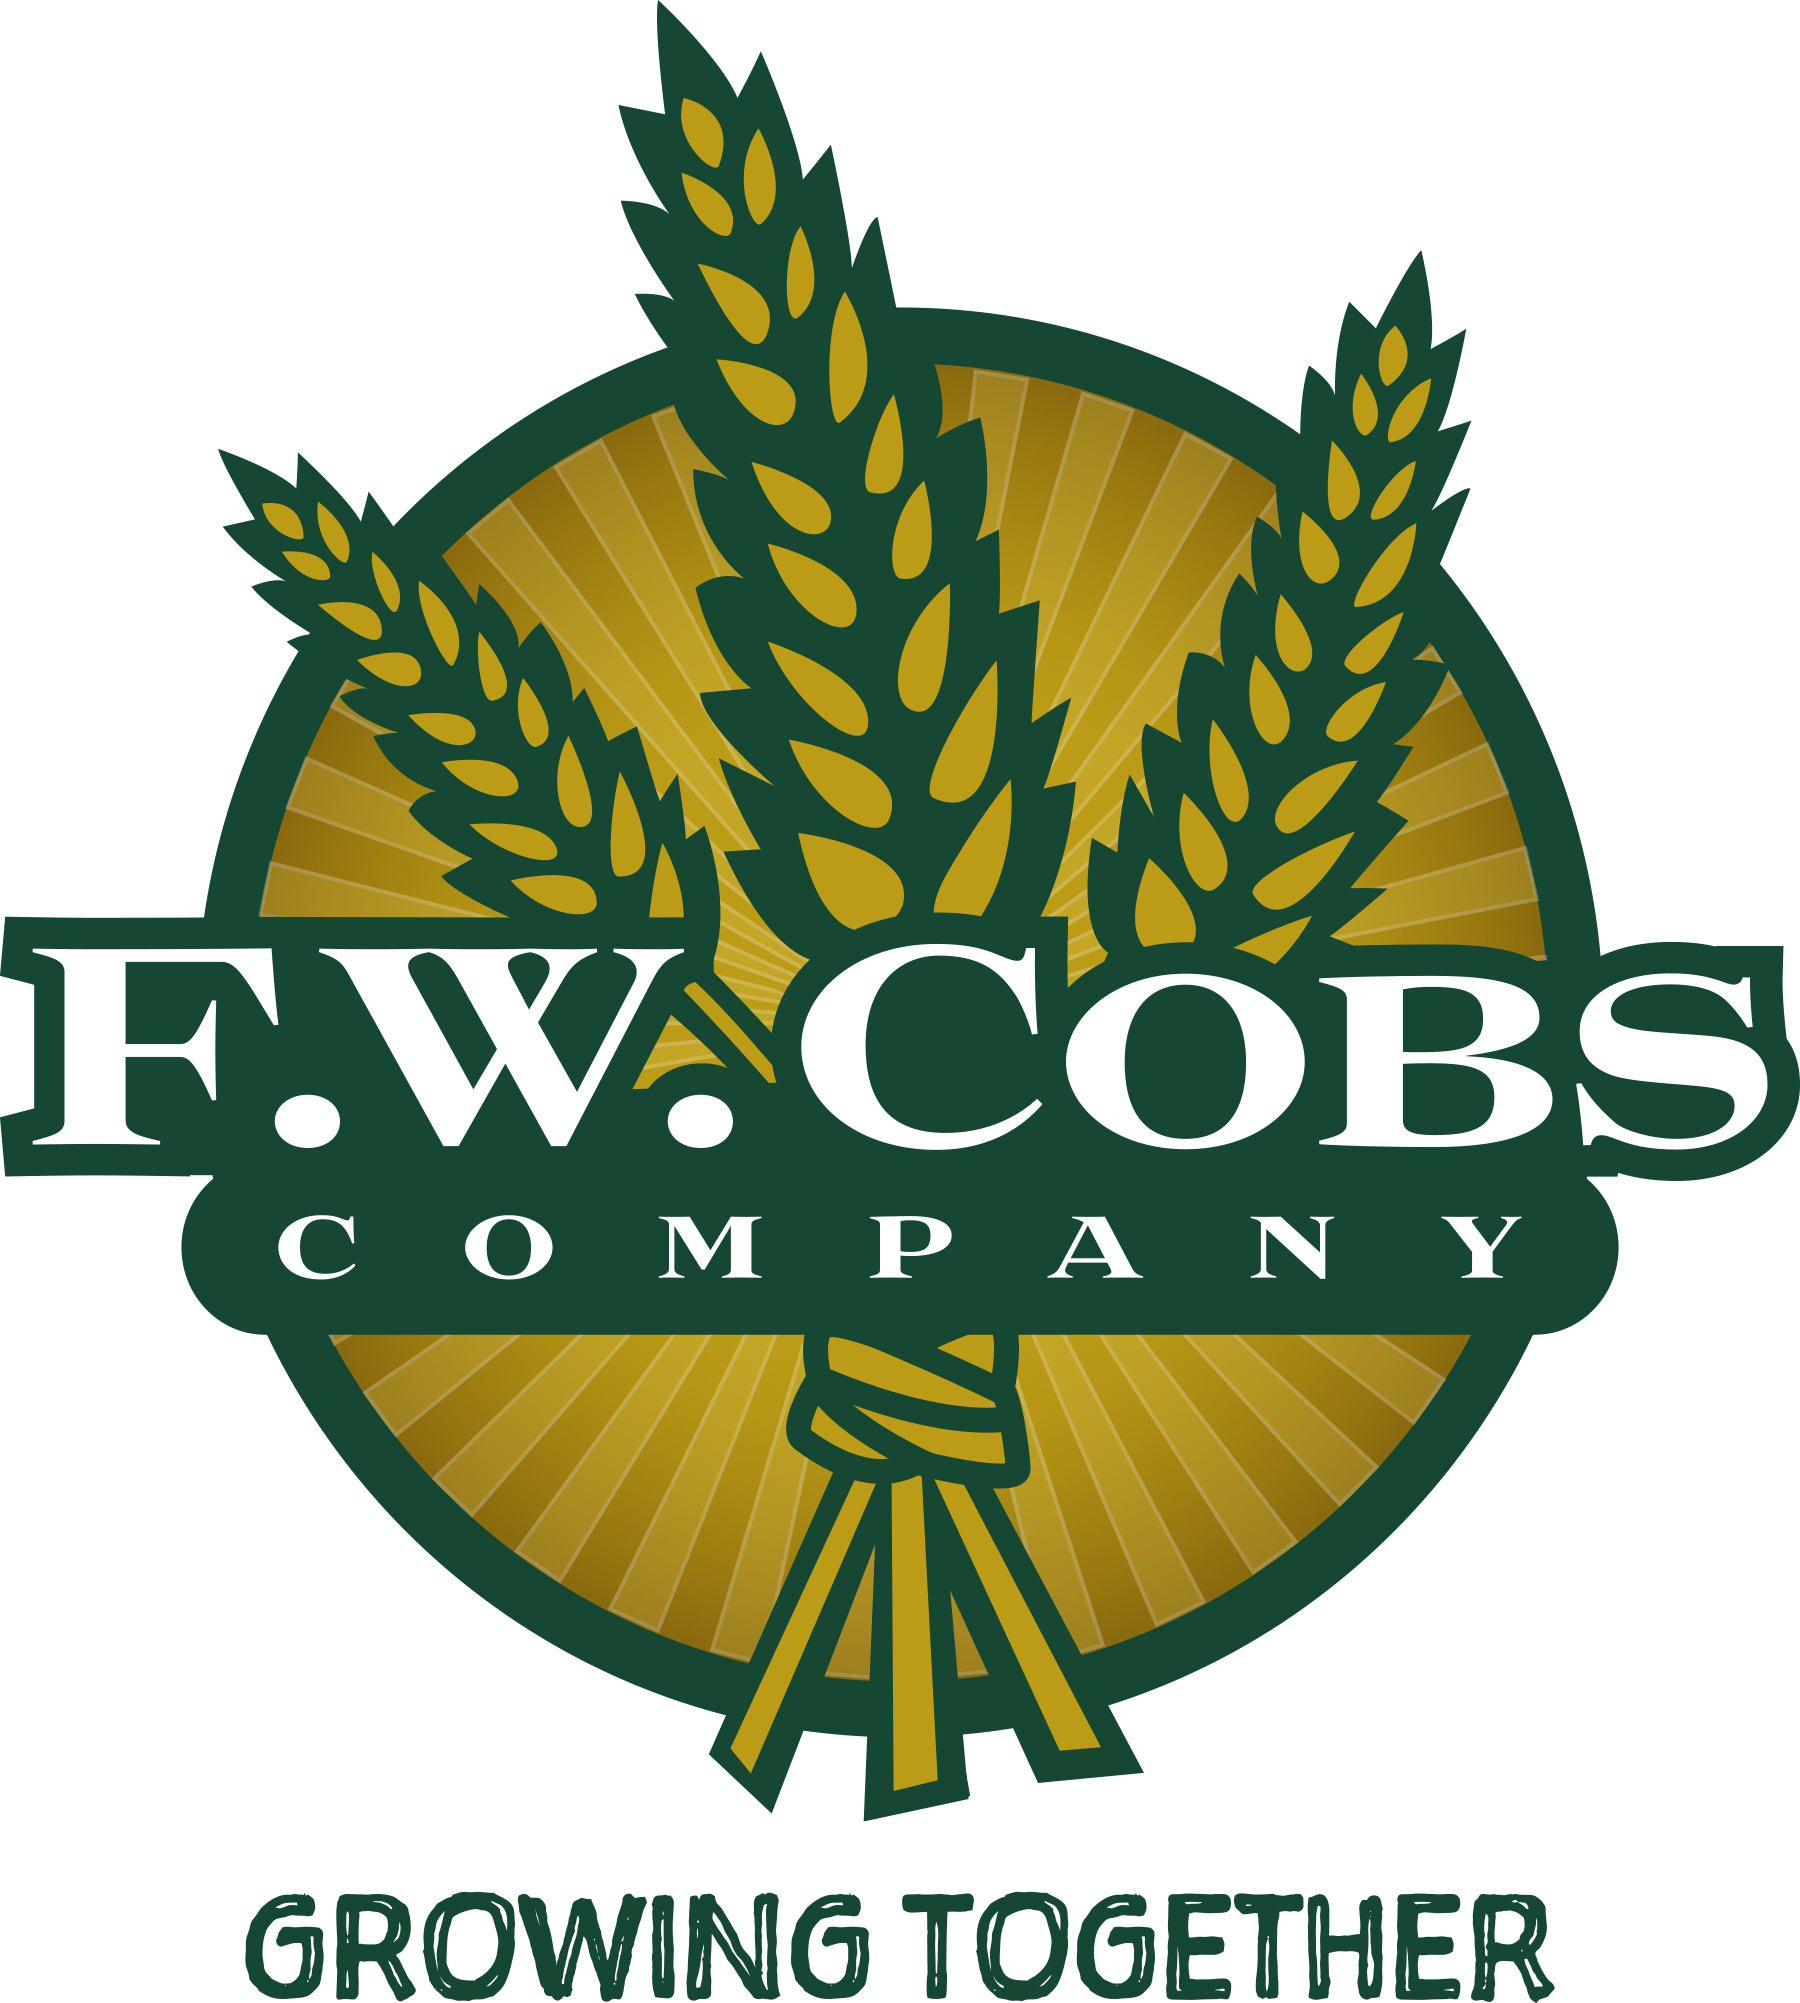 F.W. Cobs Company